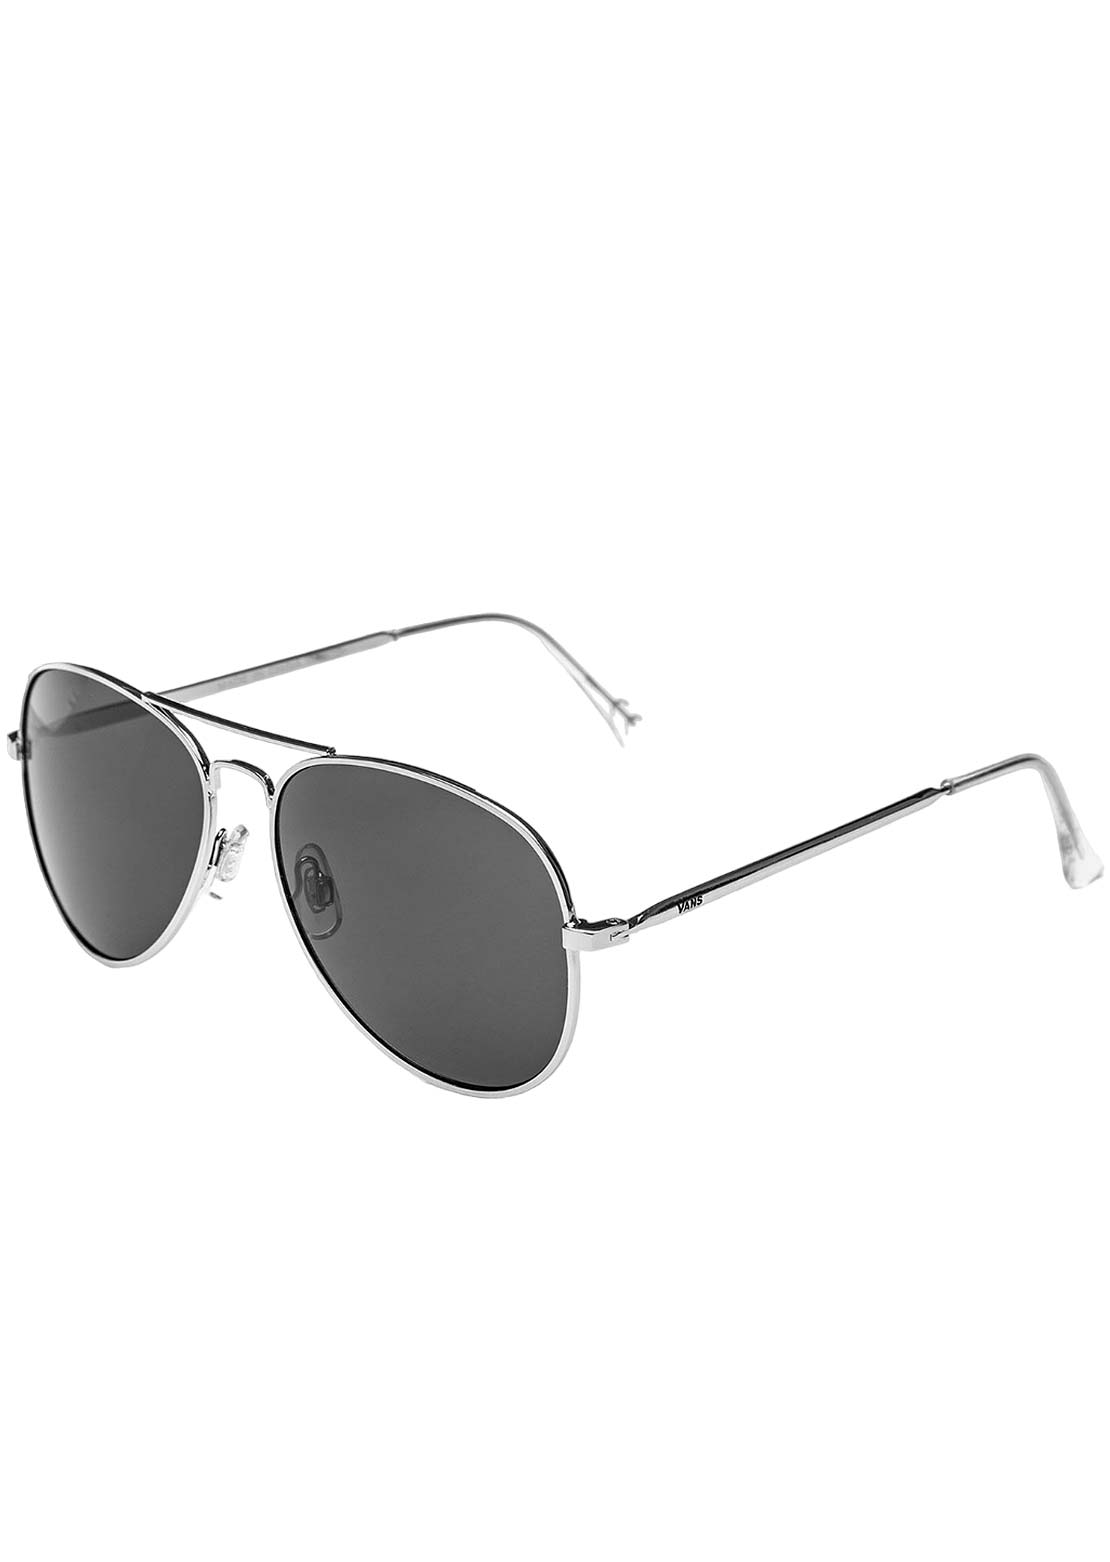 Vans Unisex Henderson Shades II Sunglasses Silver